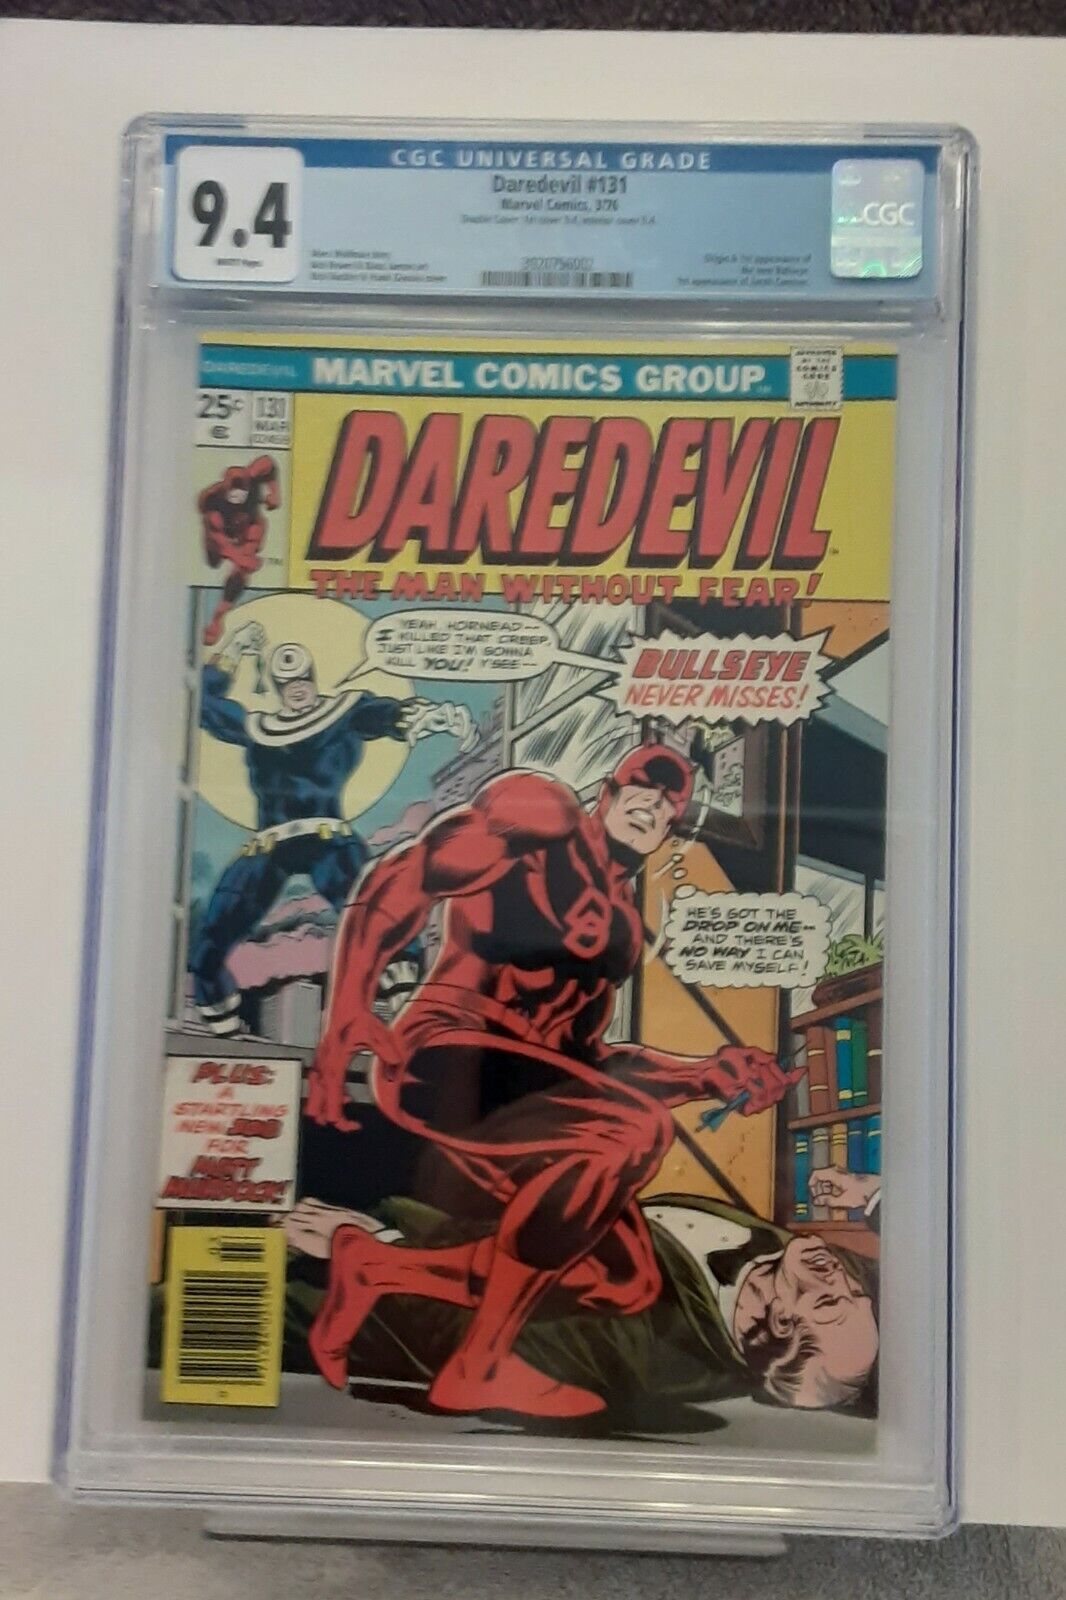 RARE Daredevil #131 CGC 9.4 